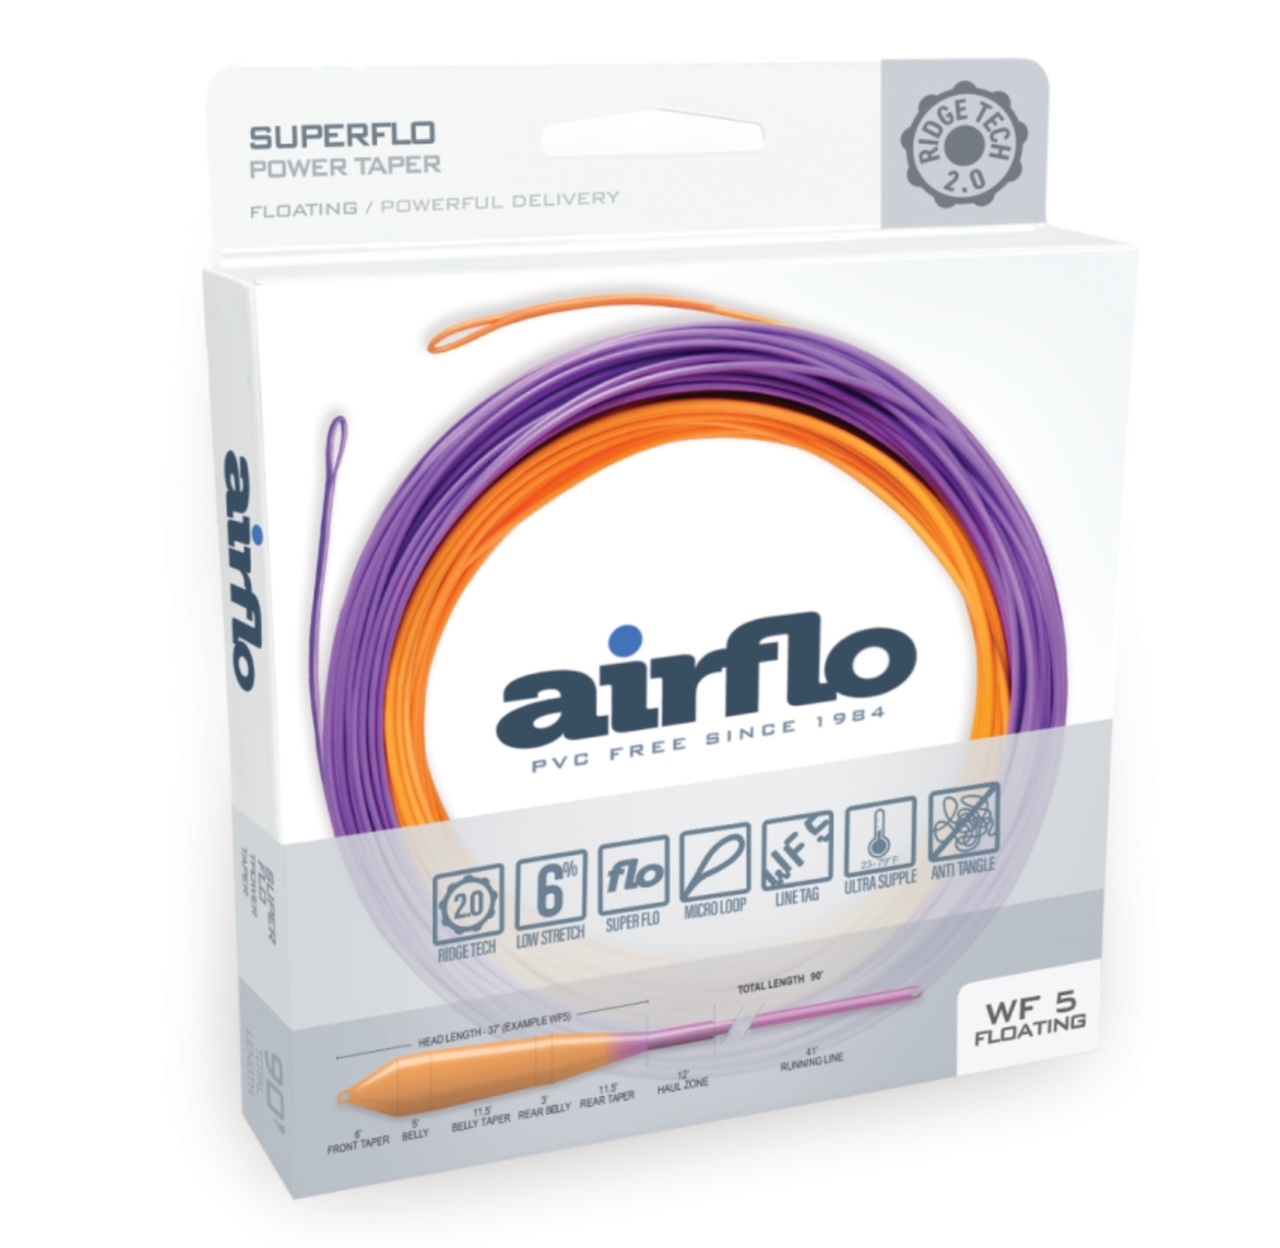 Airflo Superflo Ridge 2.0 Power Taper - WF4F - Sunburst/Purple